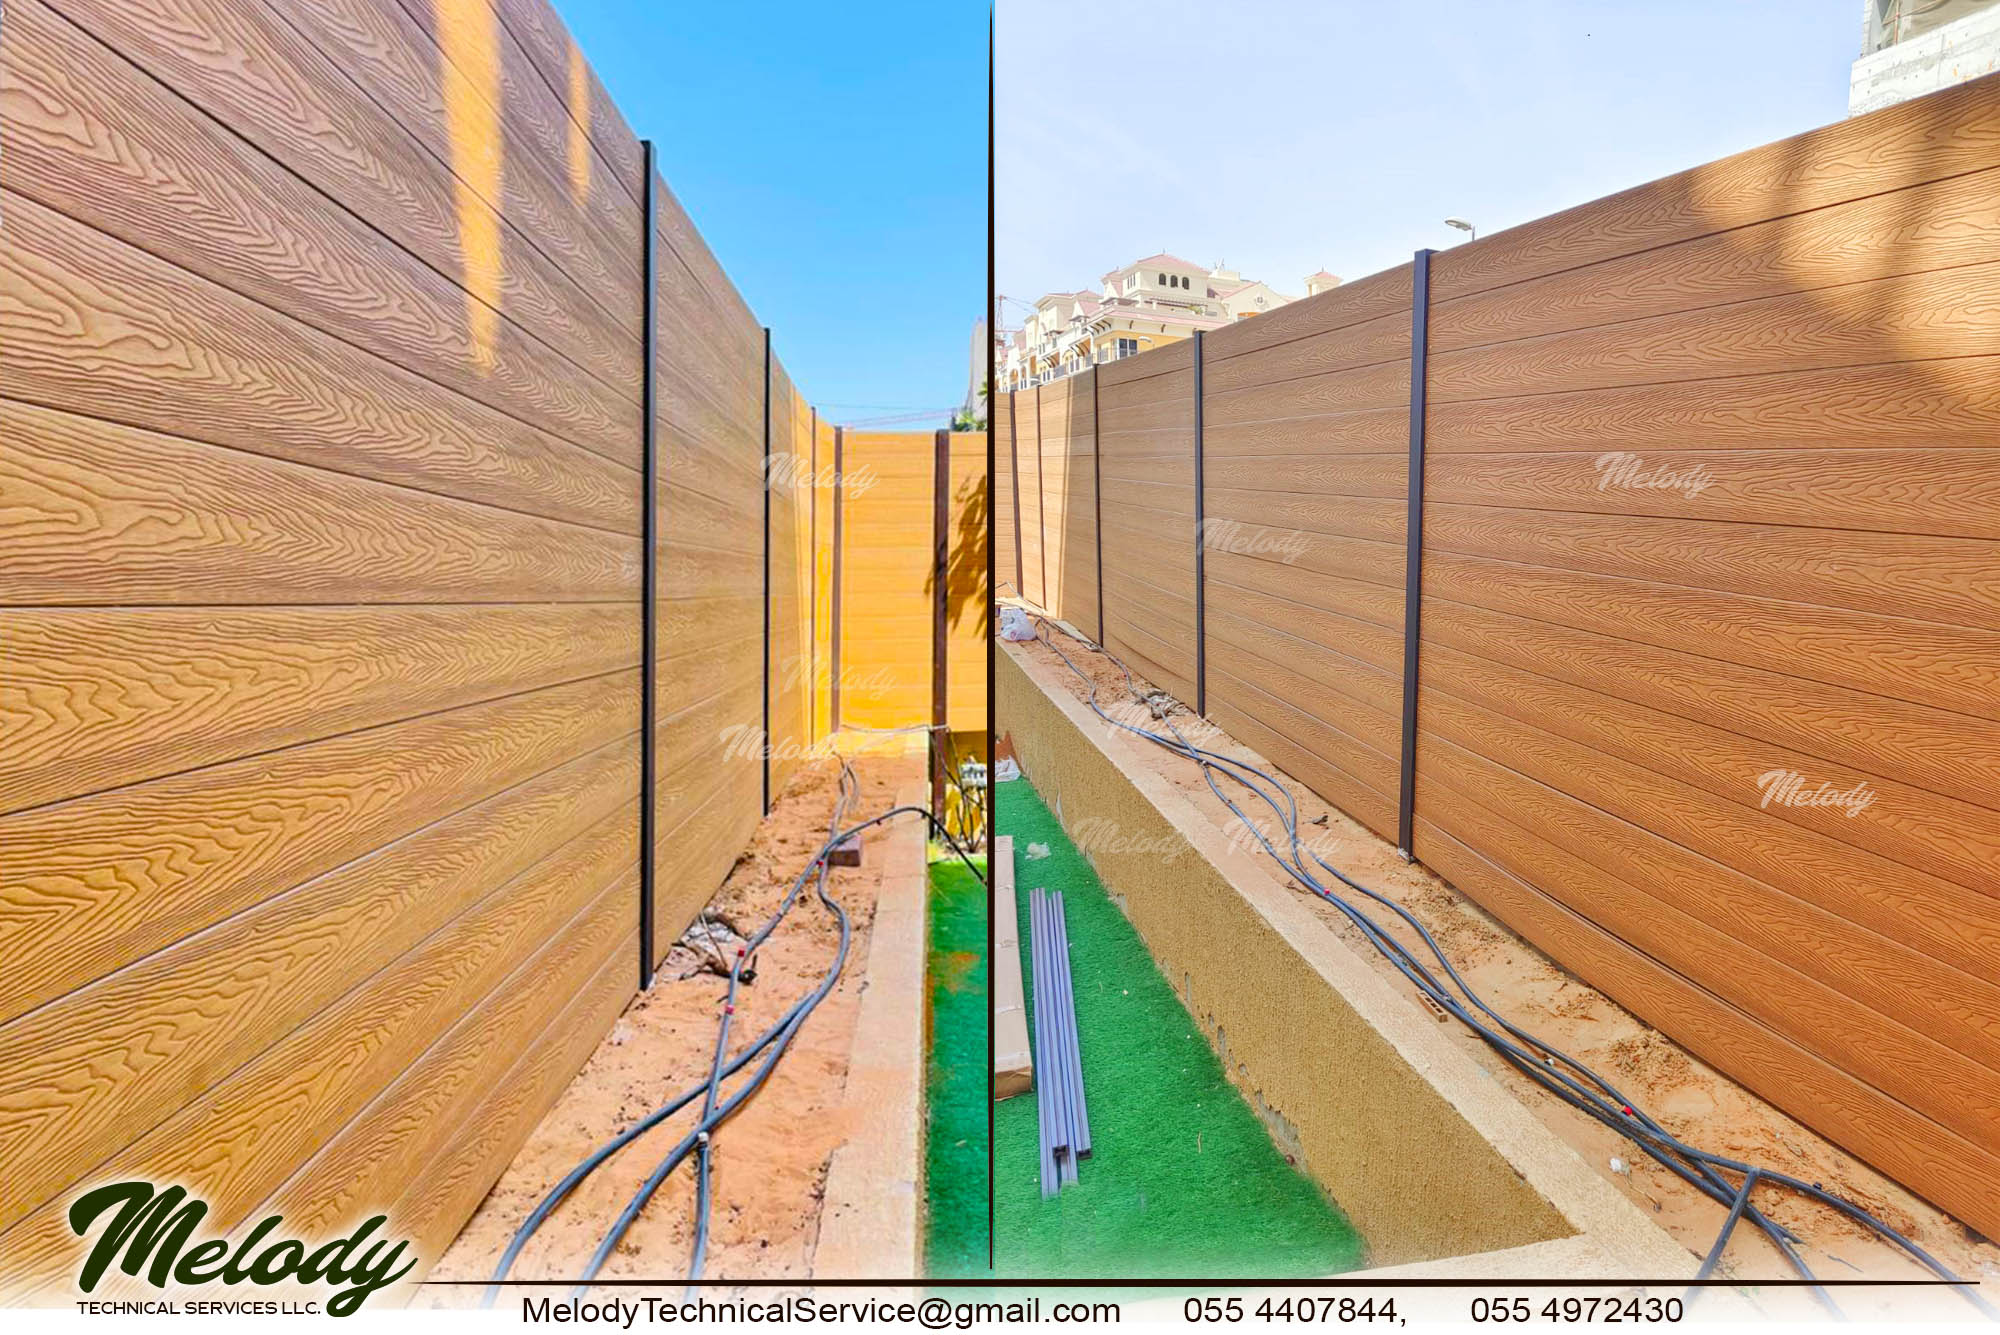 Wall Privacy Fence in Dubai, Wooden Fence, Garden Fence UAE (4).jpg